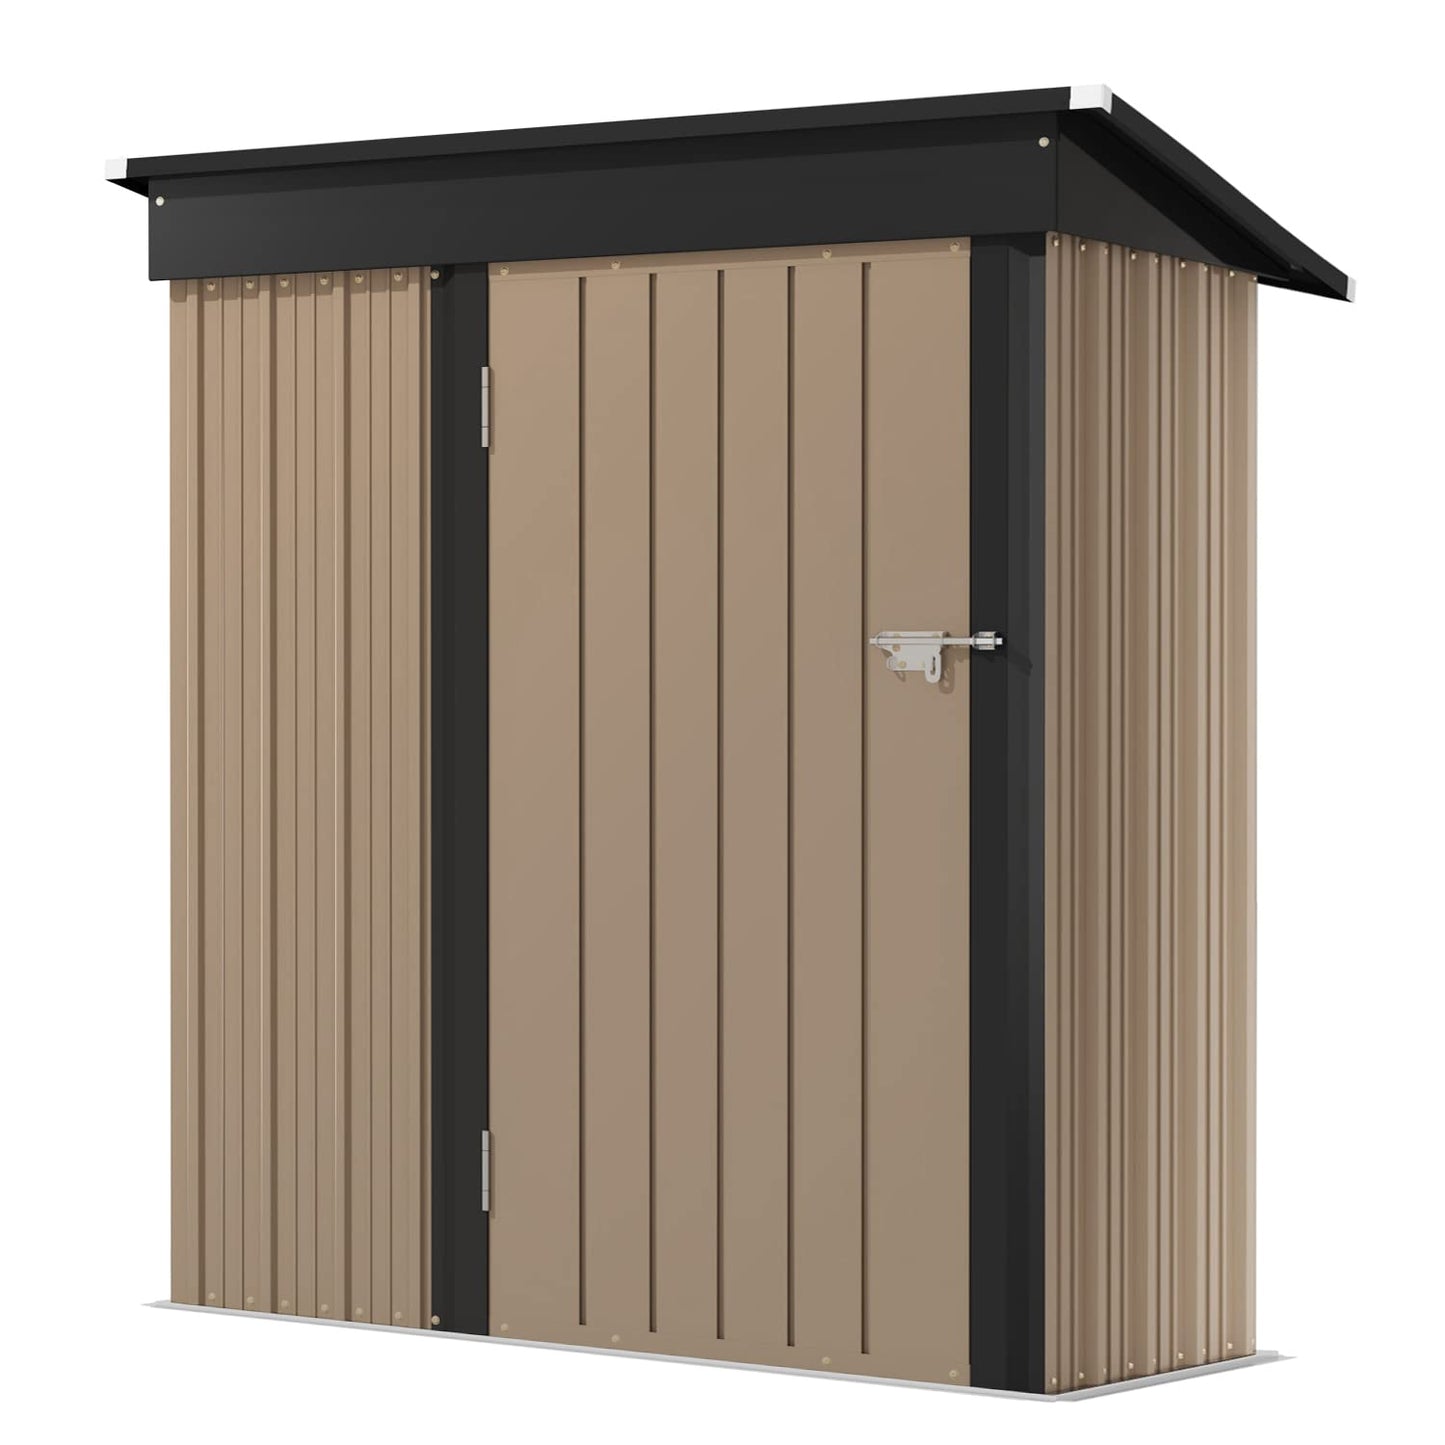 Devoko Outdoor Storage Shed 5 x 3 FT Lockable Metal Garden Shed Steel Anti-Corrosion Storage House with Single Lockable Door for Backyard Outdoor Patio (Brown)